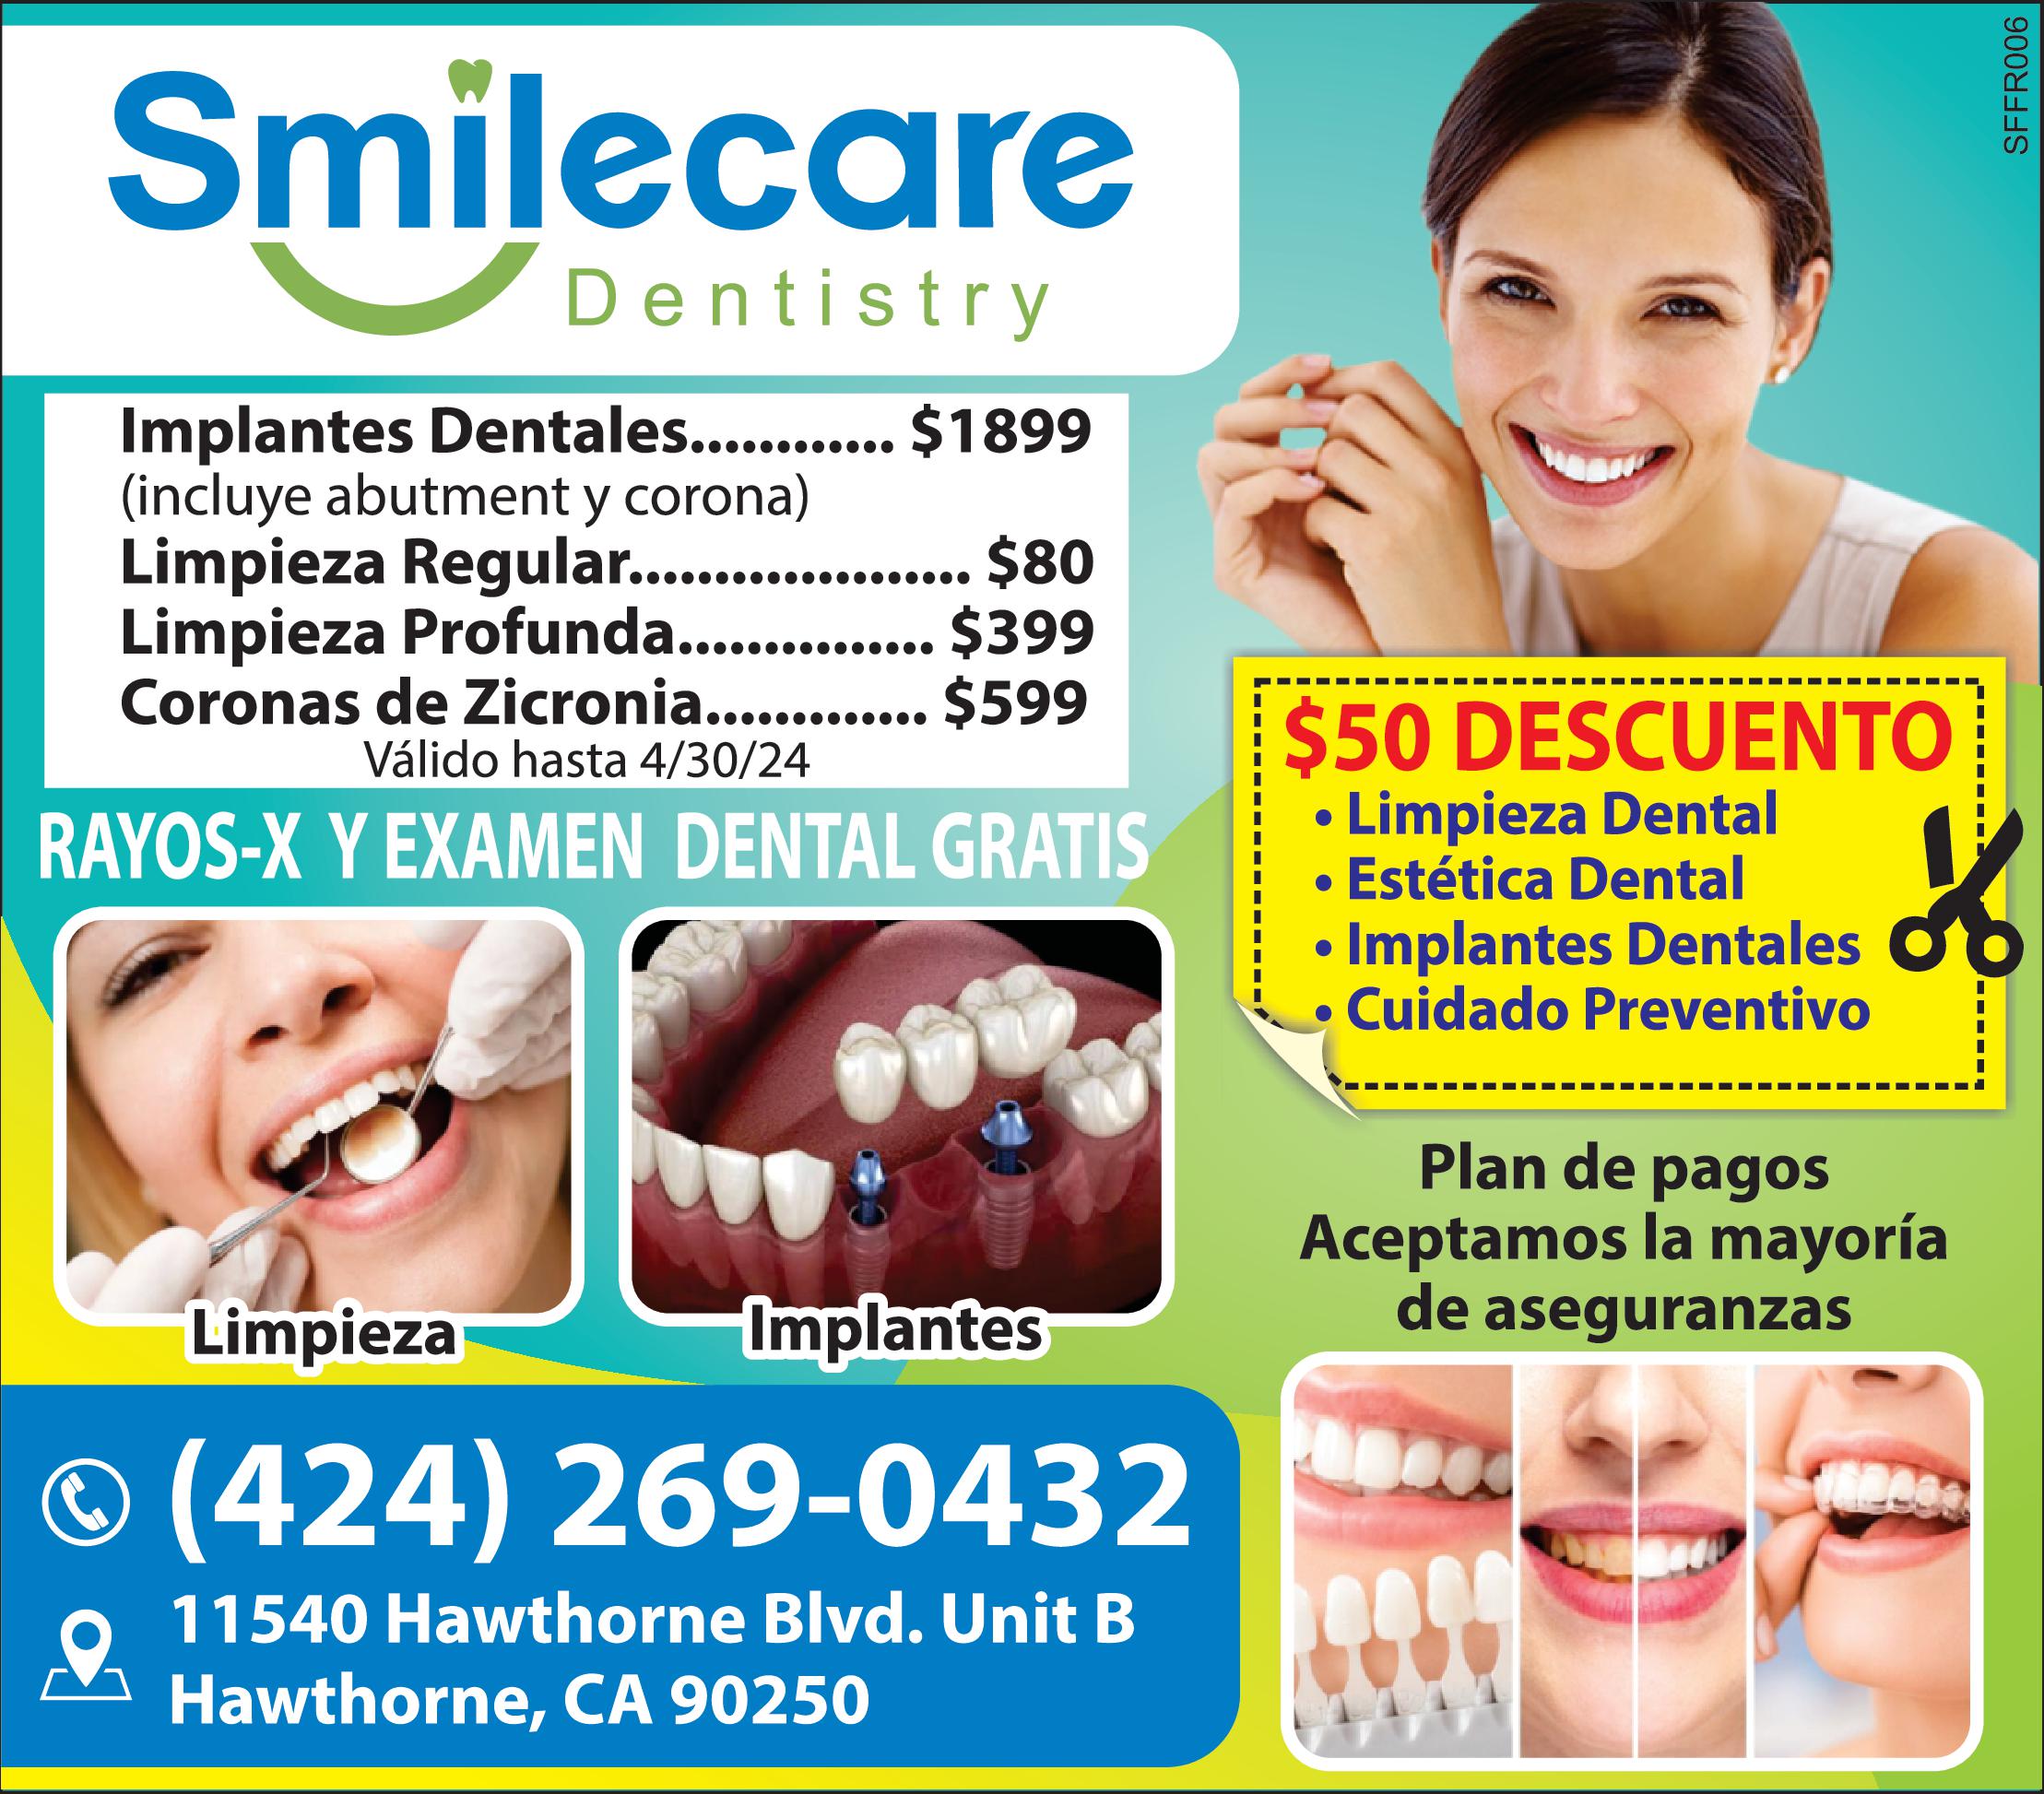 Smile Care Dentistry